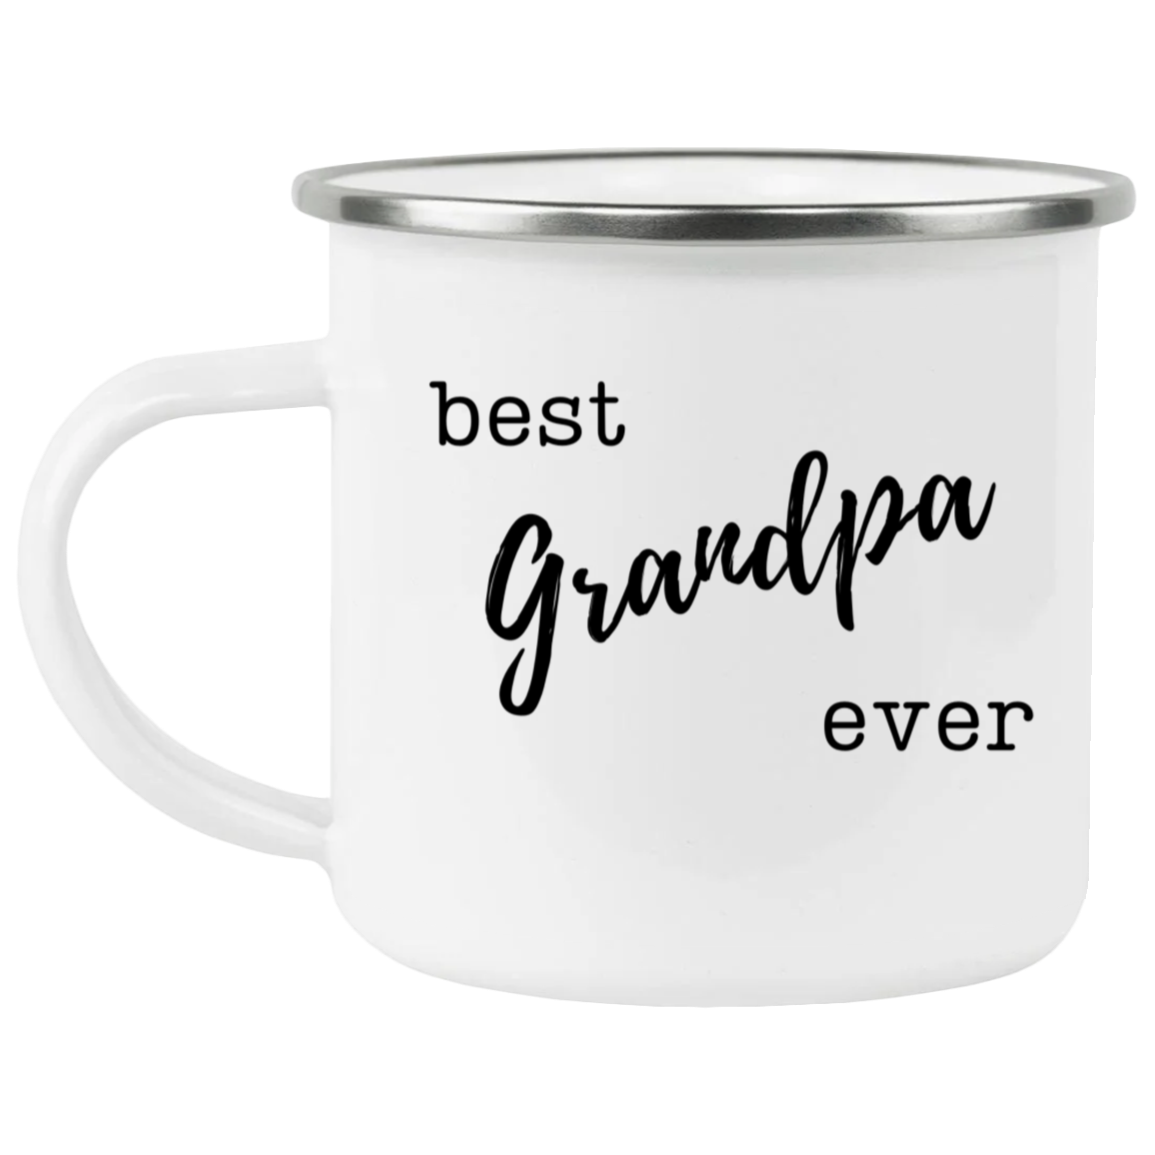 Best Grandpa Ever Enamel Camping Mug